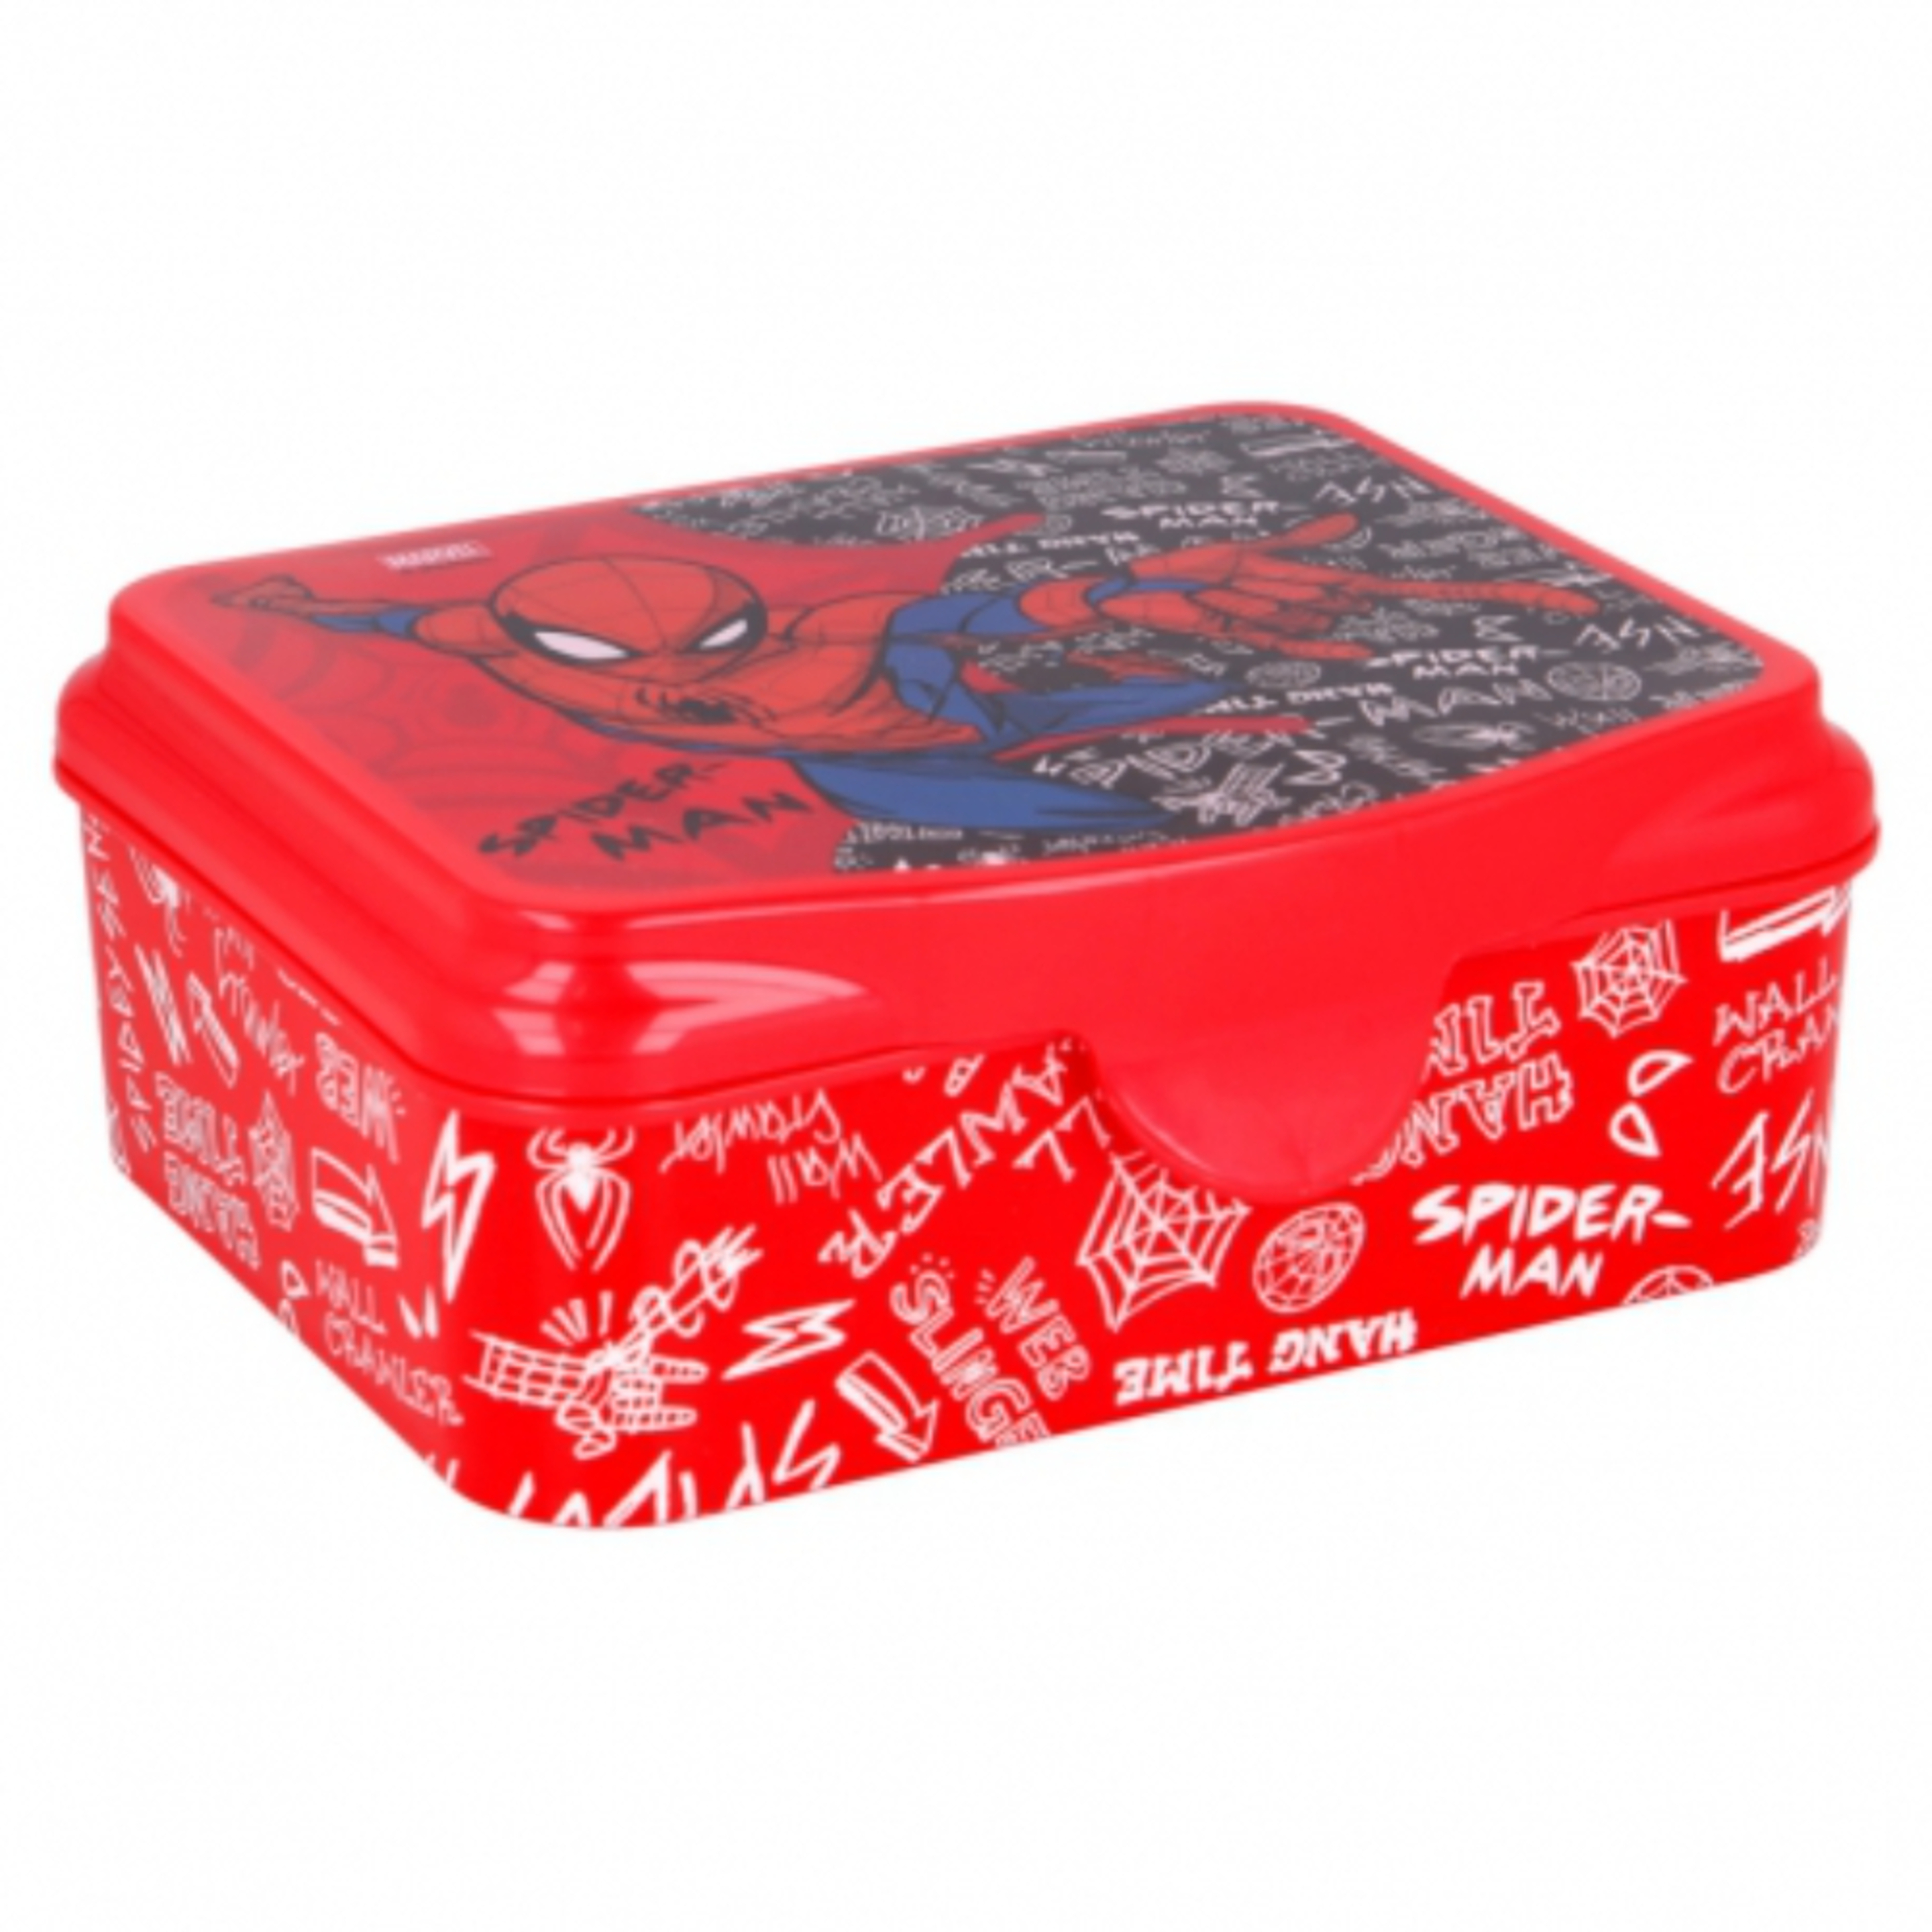 Sandwichera Spiderman 65778 - rojo - 